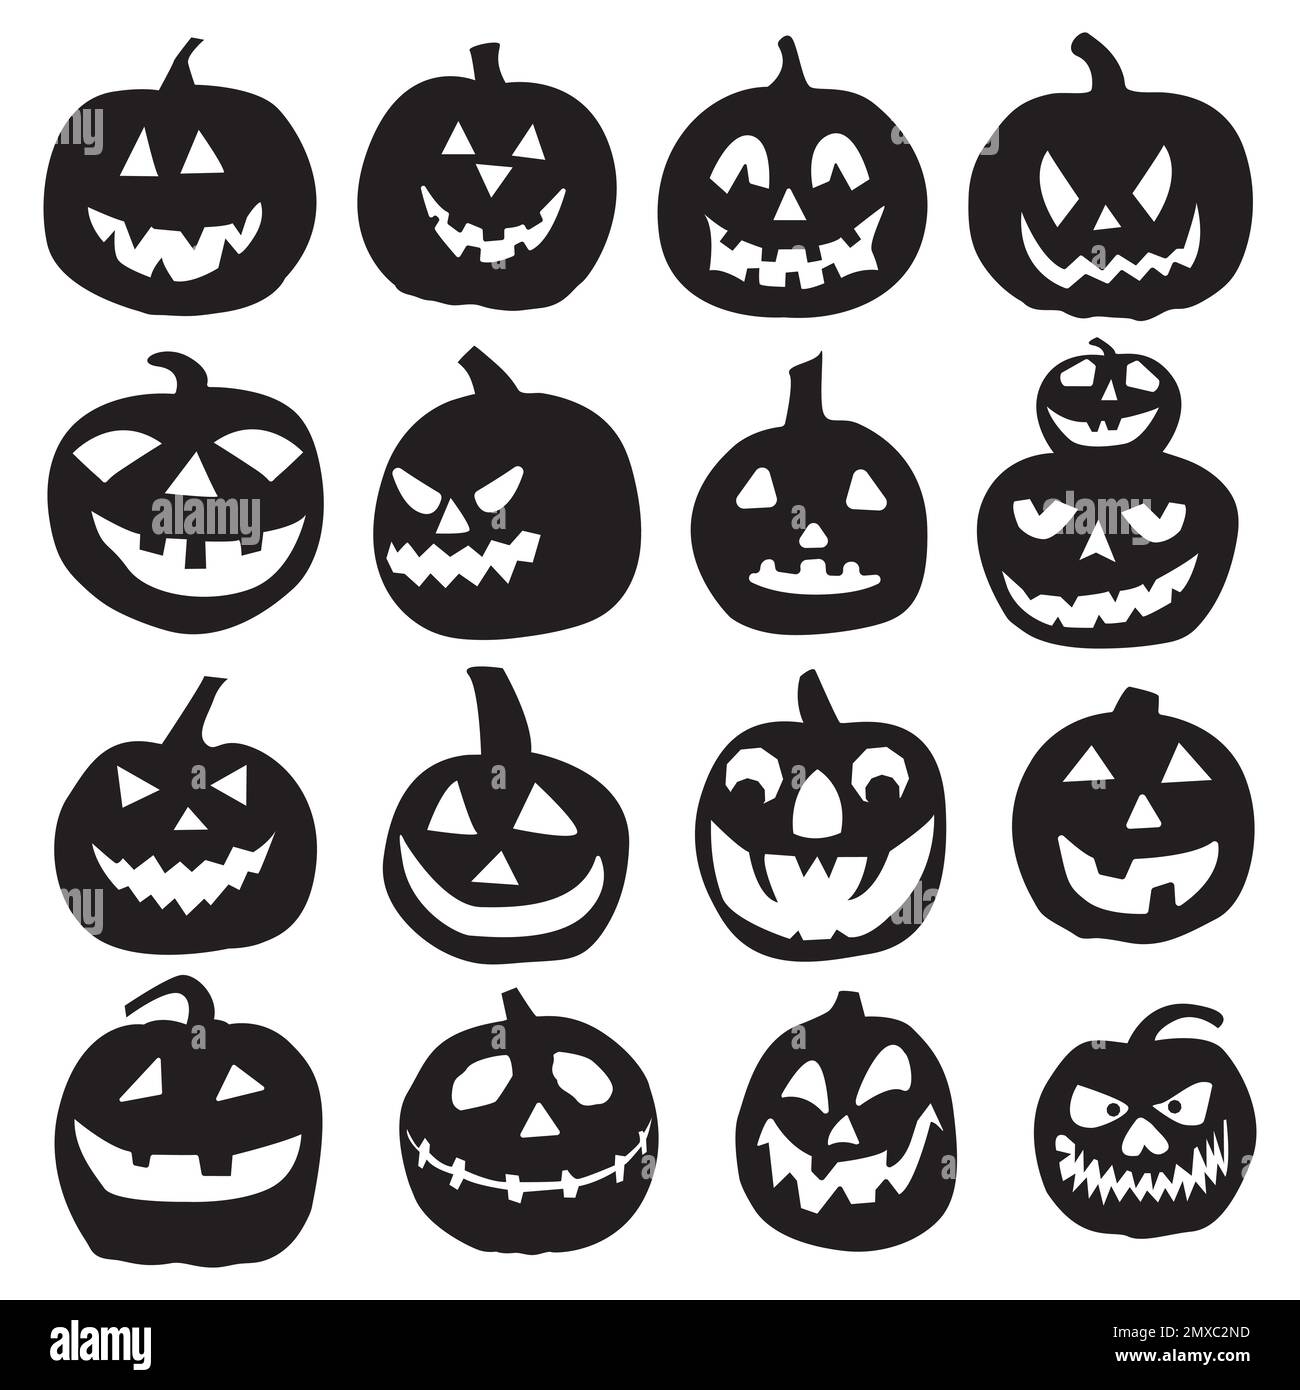 Halloween pumpkin silhouette collection, Set of pumpkins. Collection of pumpkin faces for Halloween. Stock Vector